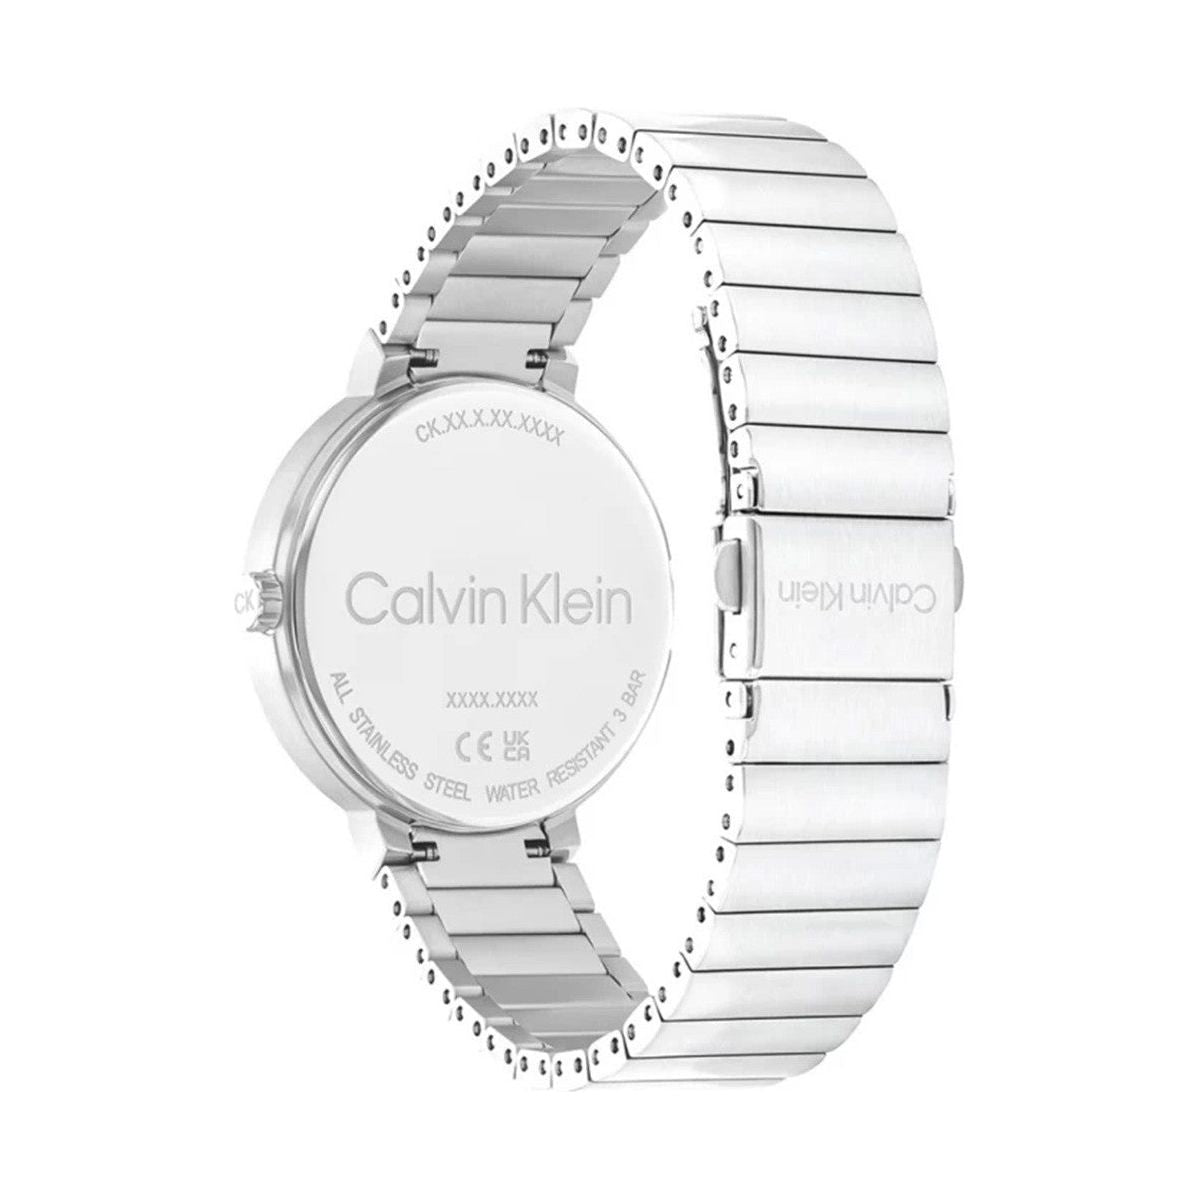 CK CALVIN KLEIN NEW COLLECTION WATCHES Mod. 25100032